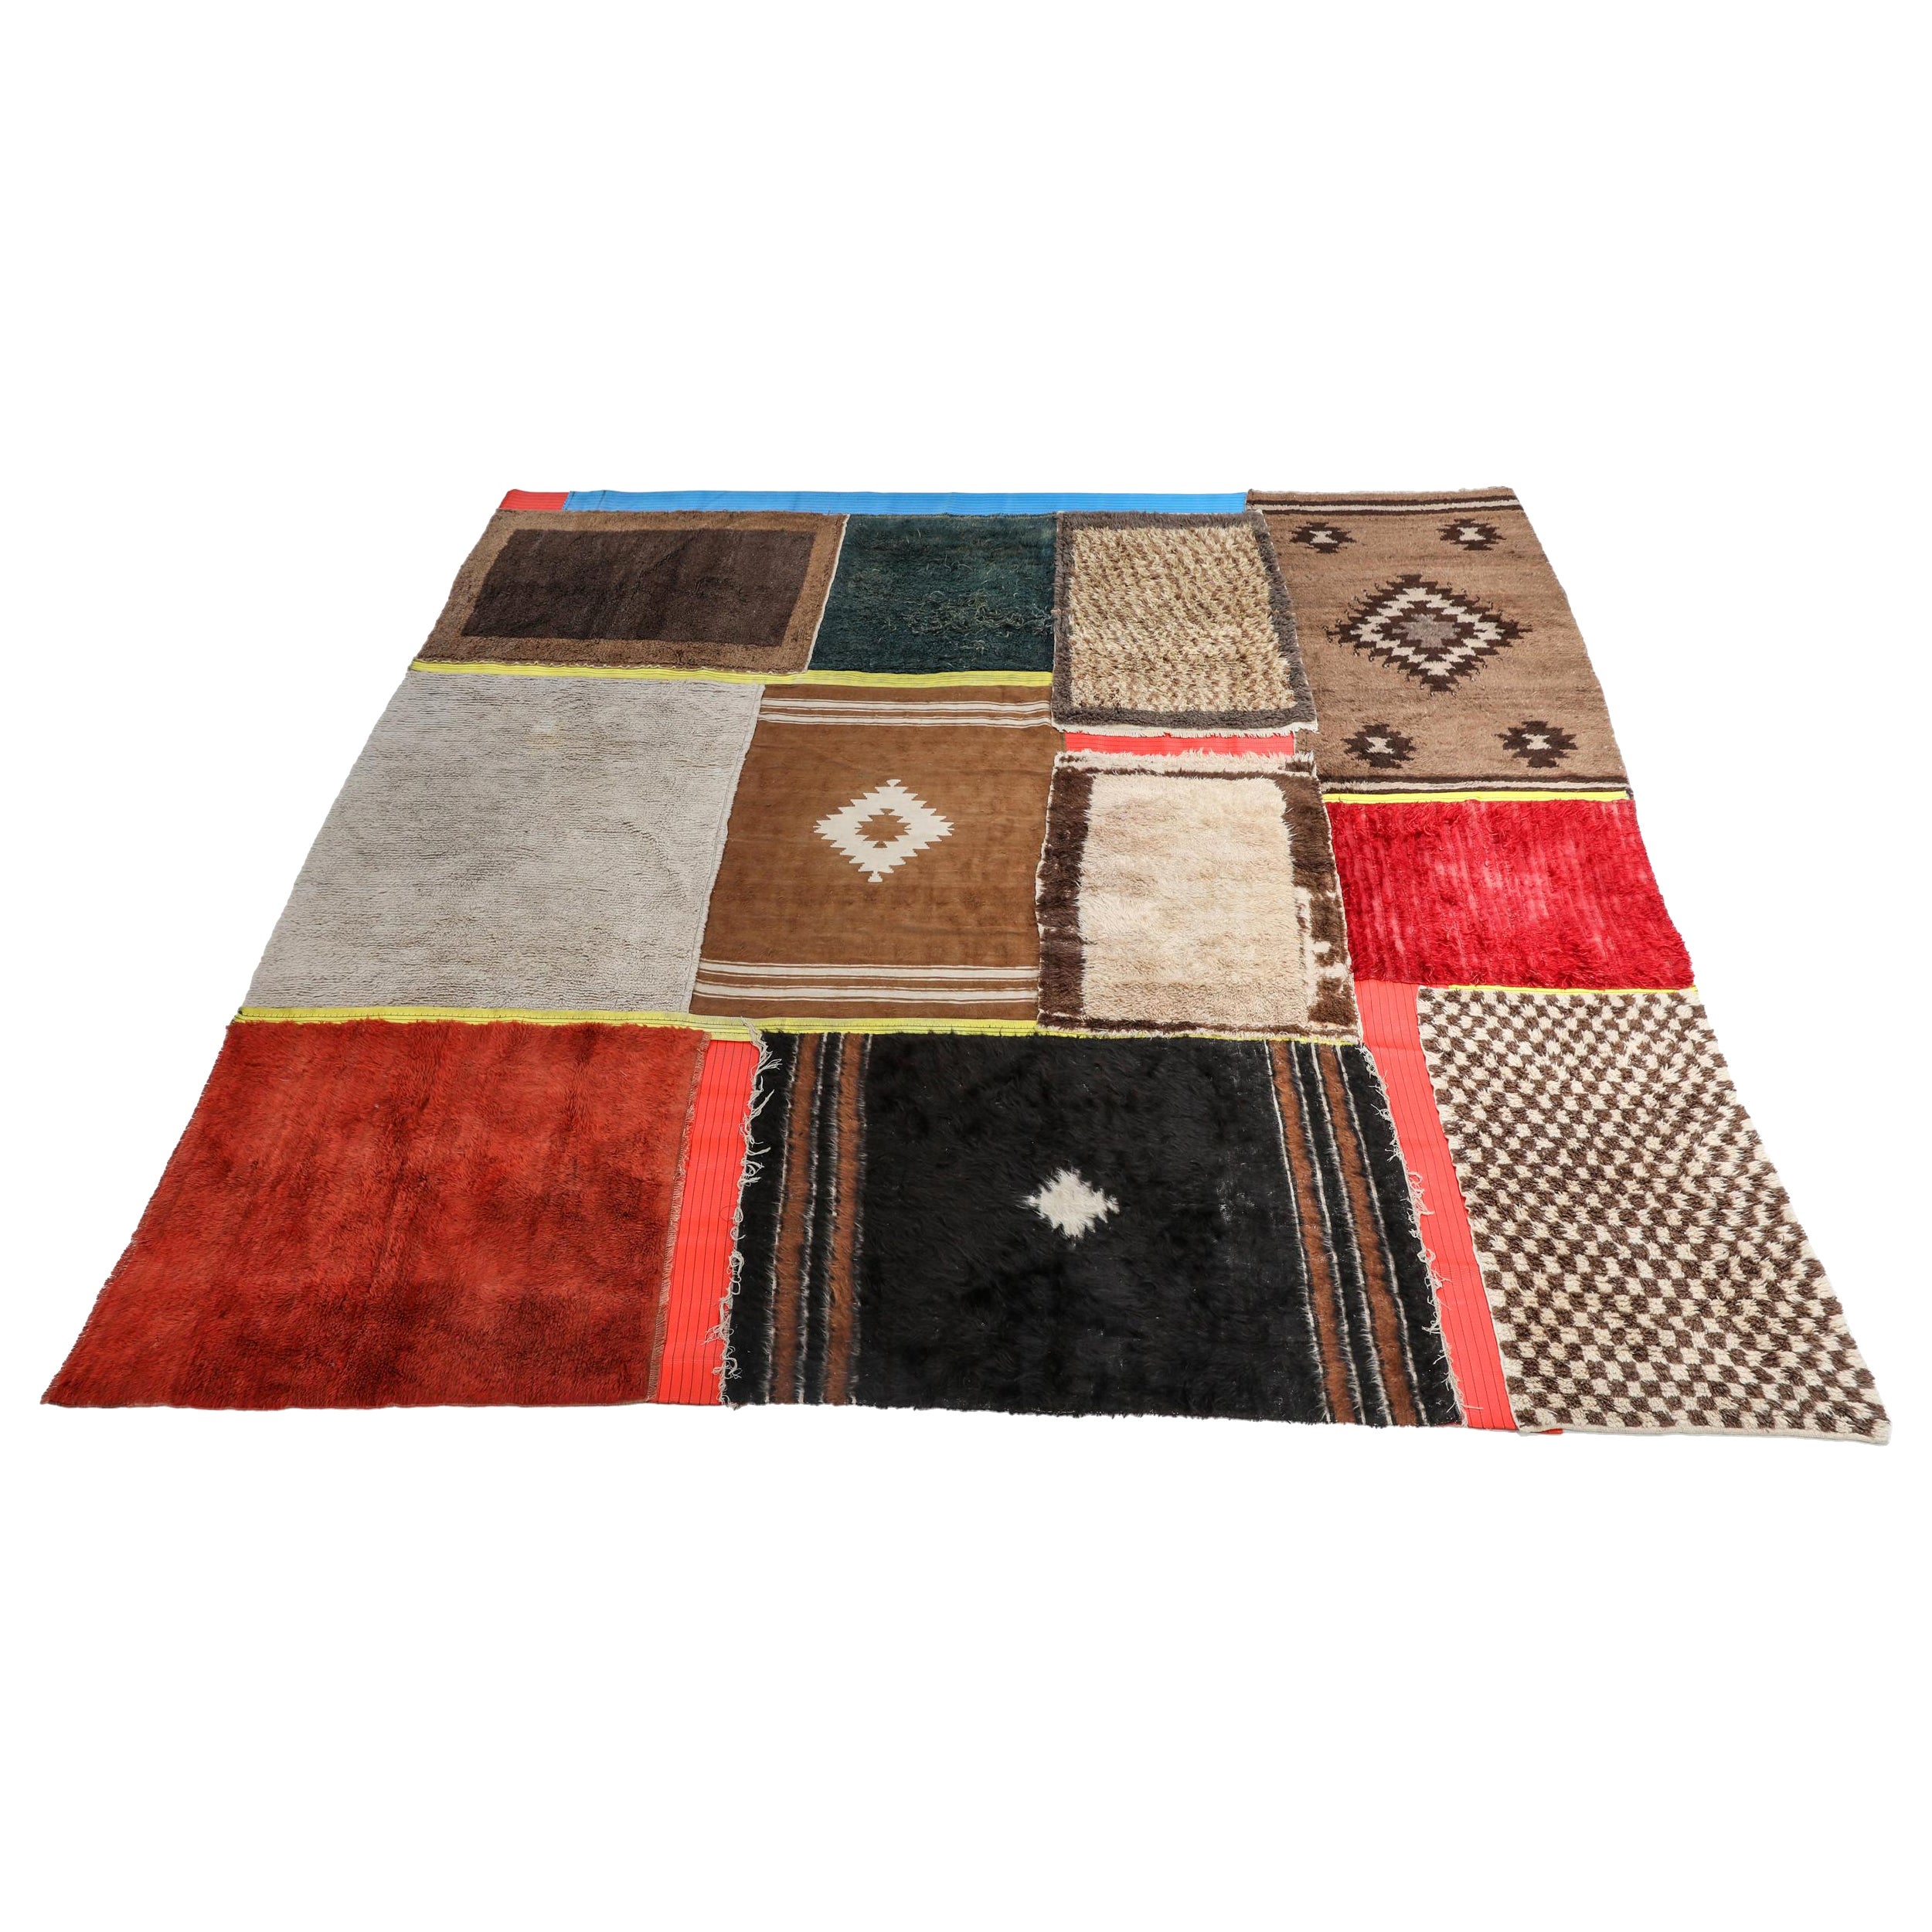 Carpet 'Turkish Delight' by Lionel Jadot, Belgium, 2021